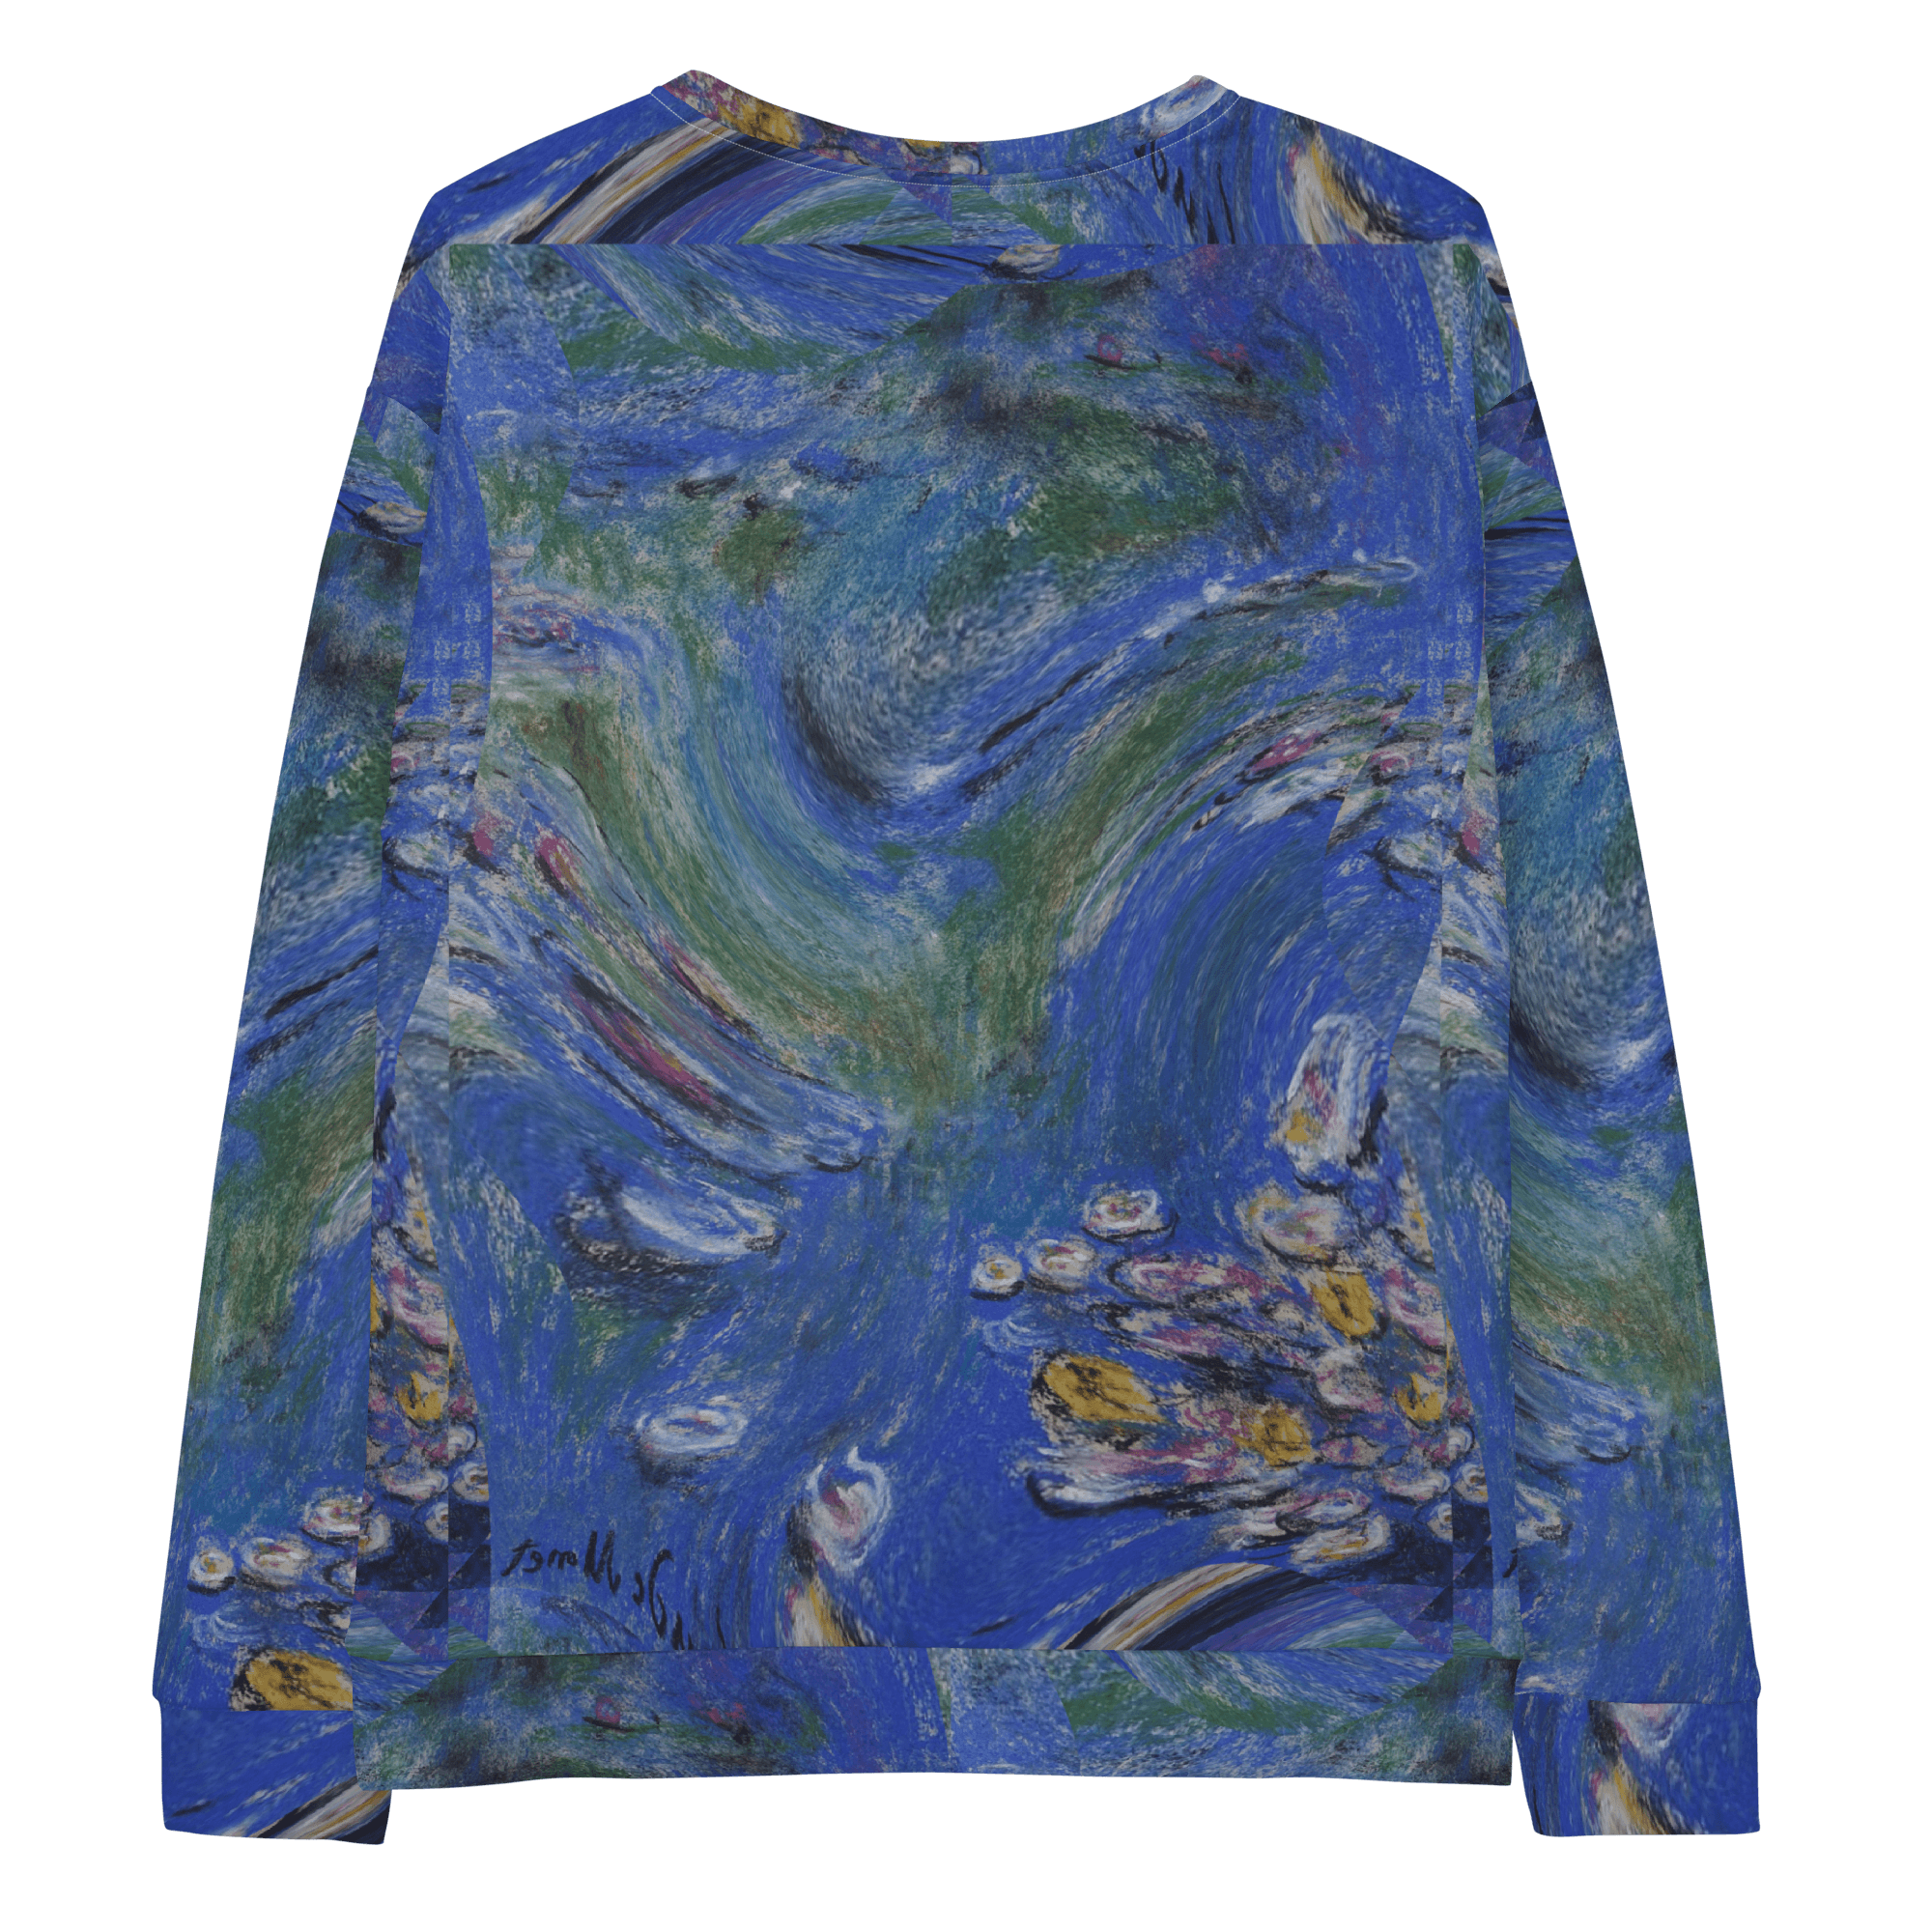 super afternoon スーパーアフタヌーン® Unisex Sweatshirt (8 pieces for sale) - Kikillo Club